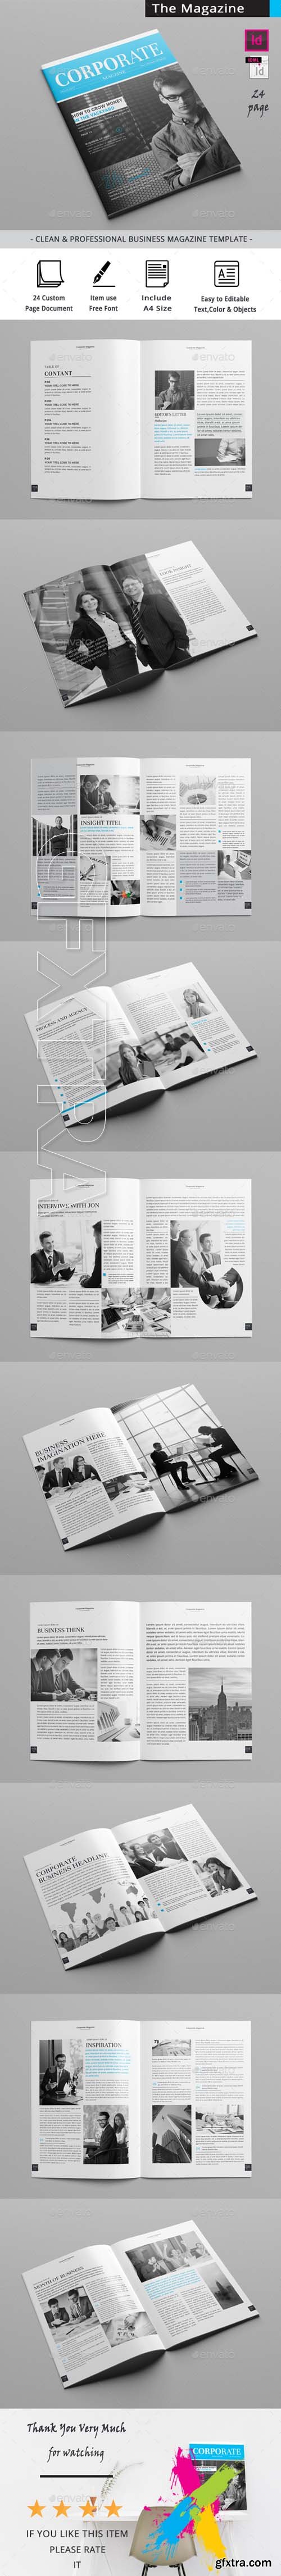 Graphicriver - Business Magazine 20173806